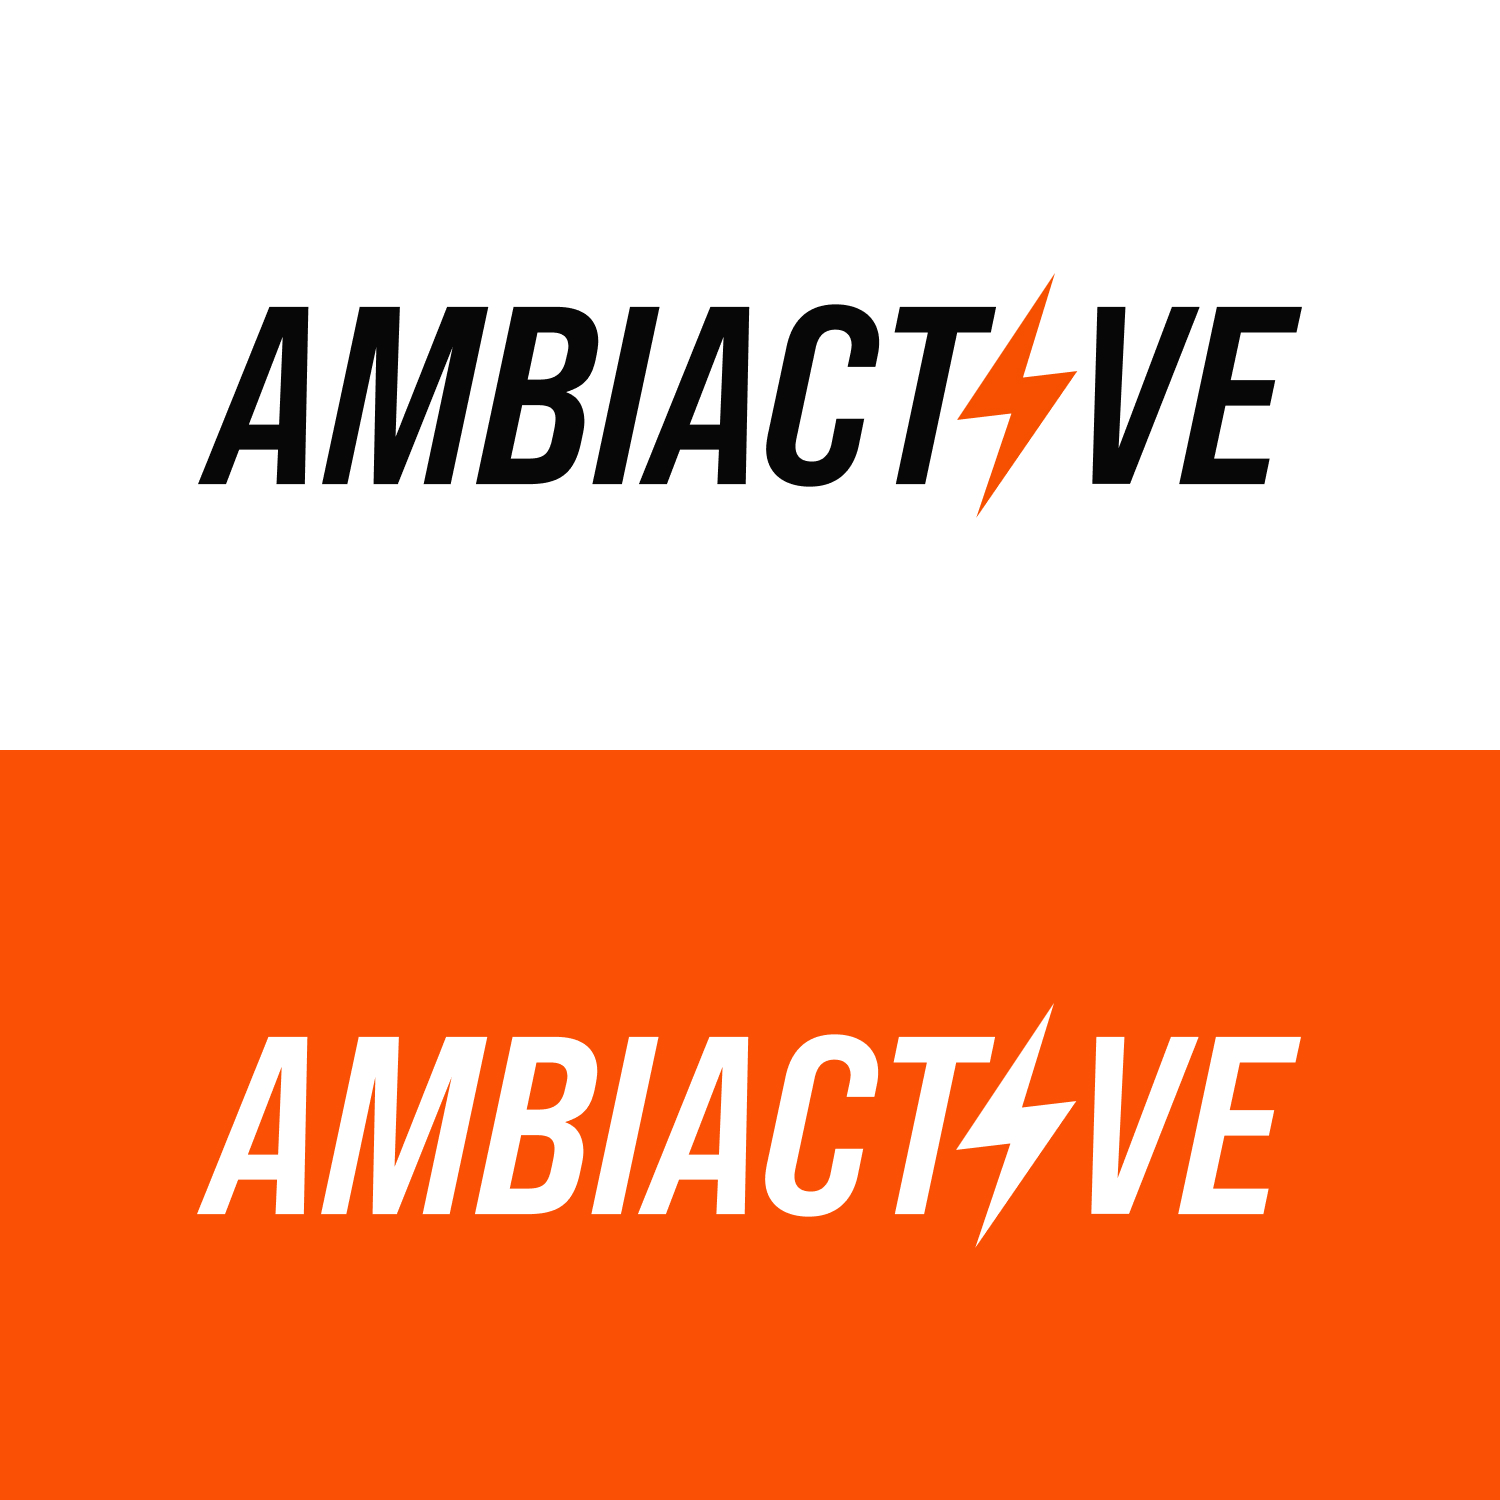 Ambiactive logotipo kūrimas